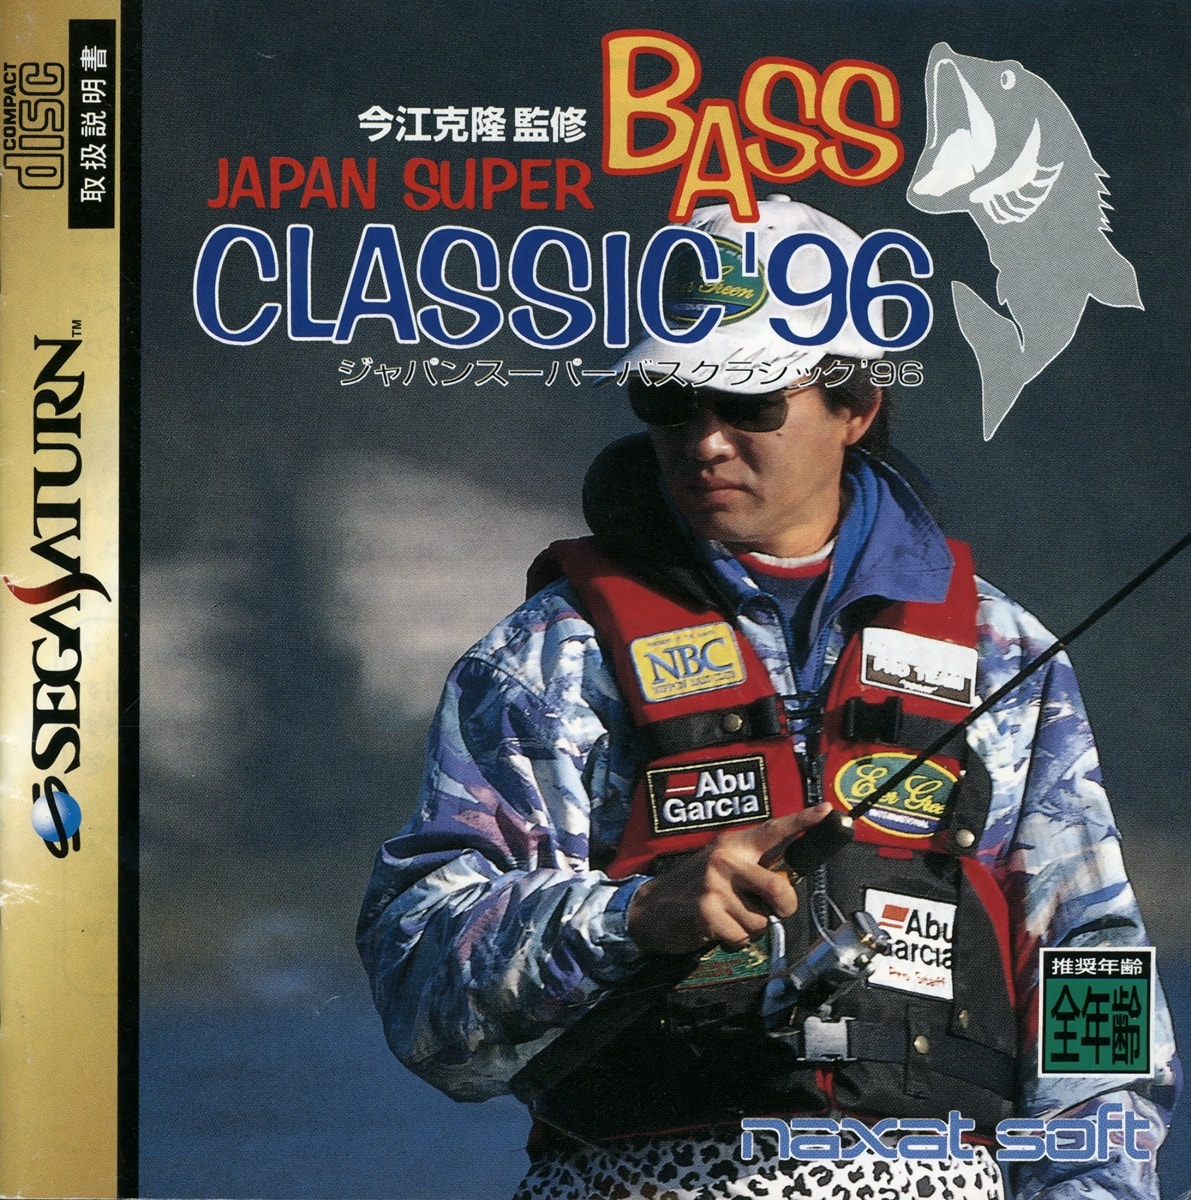 Japan Super Bass Classic 96 cover